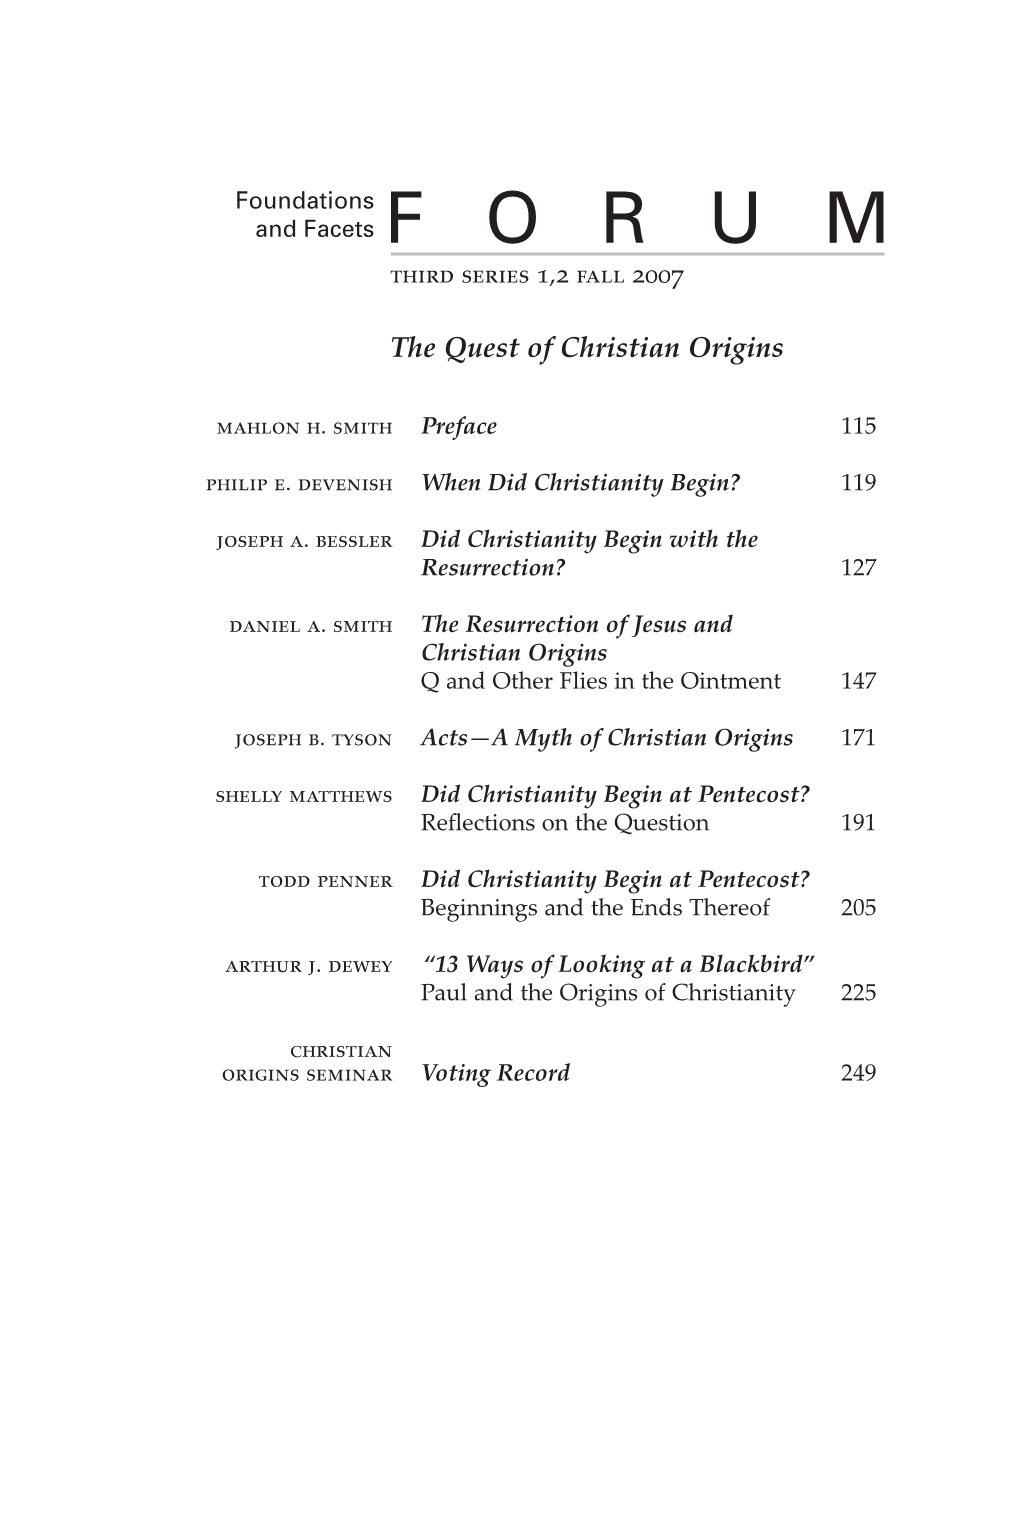 Forum 1,2 the Quest of Christian Origins